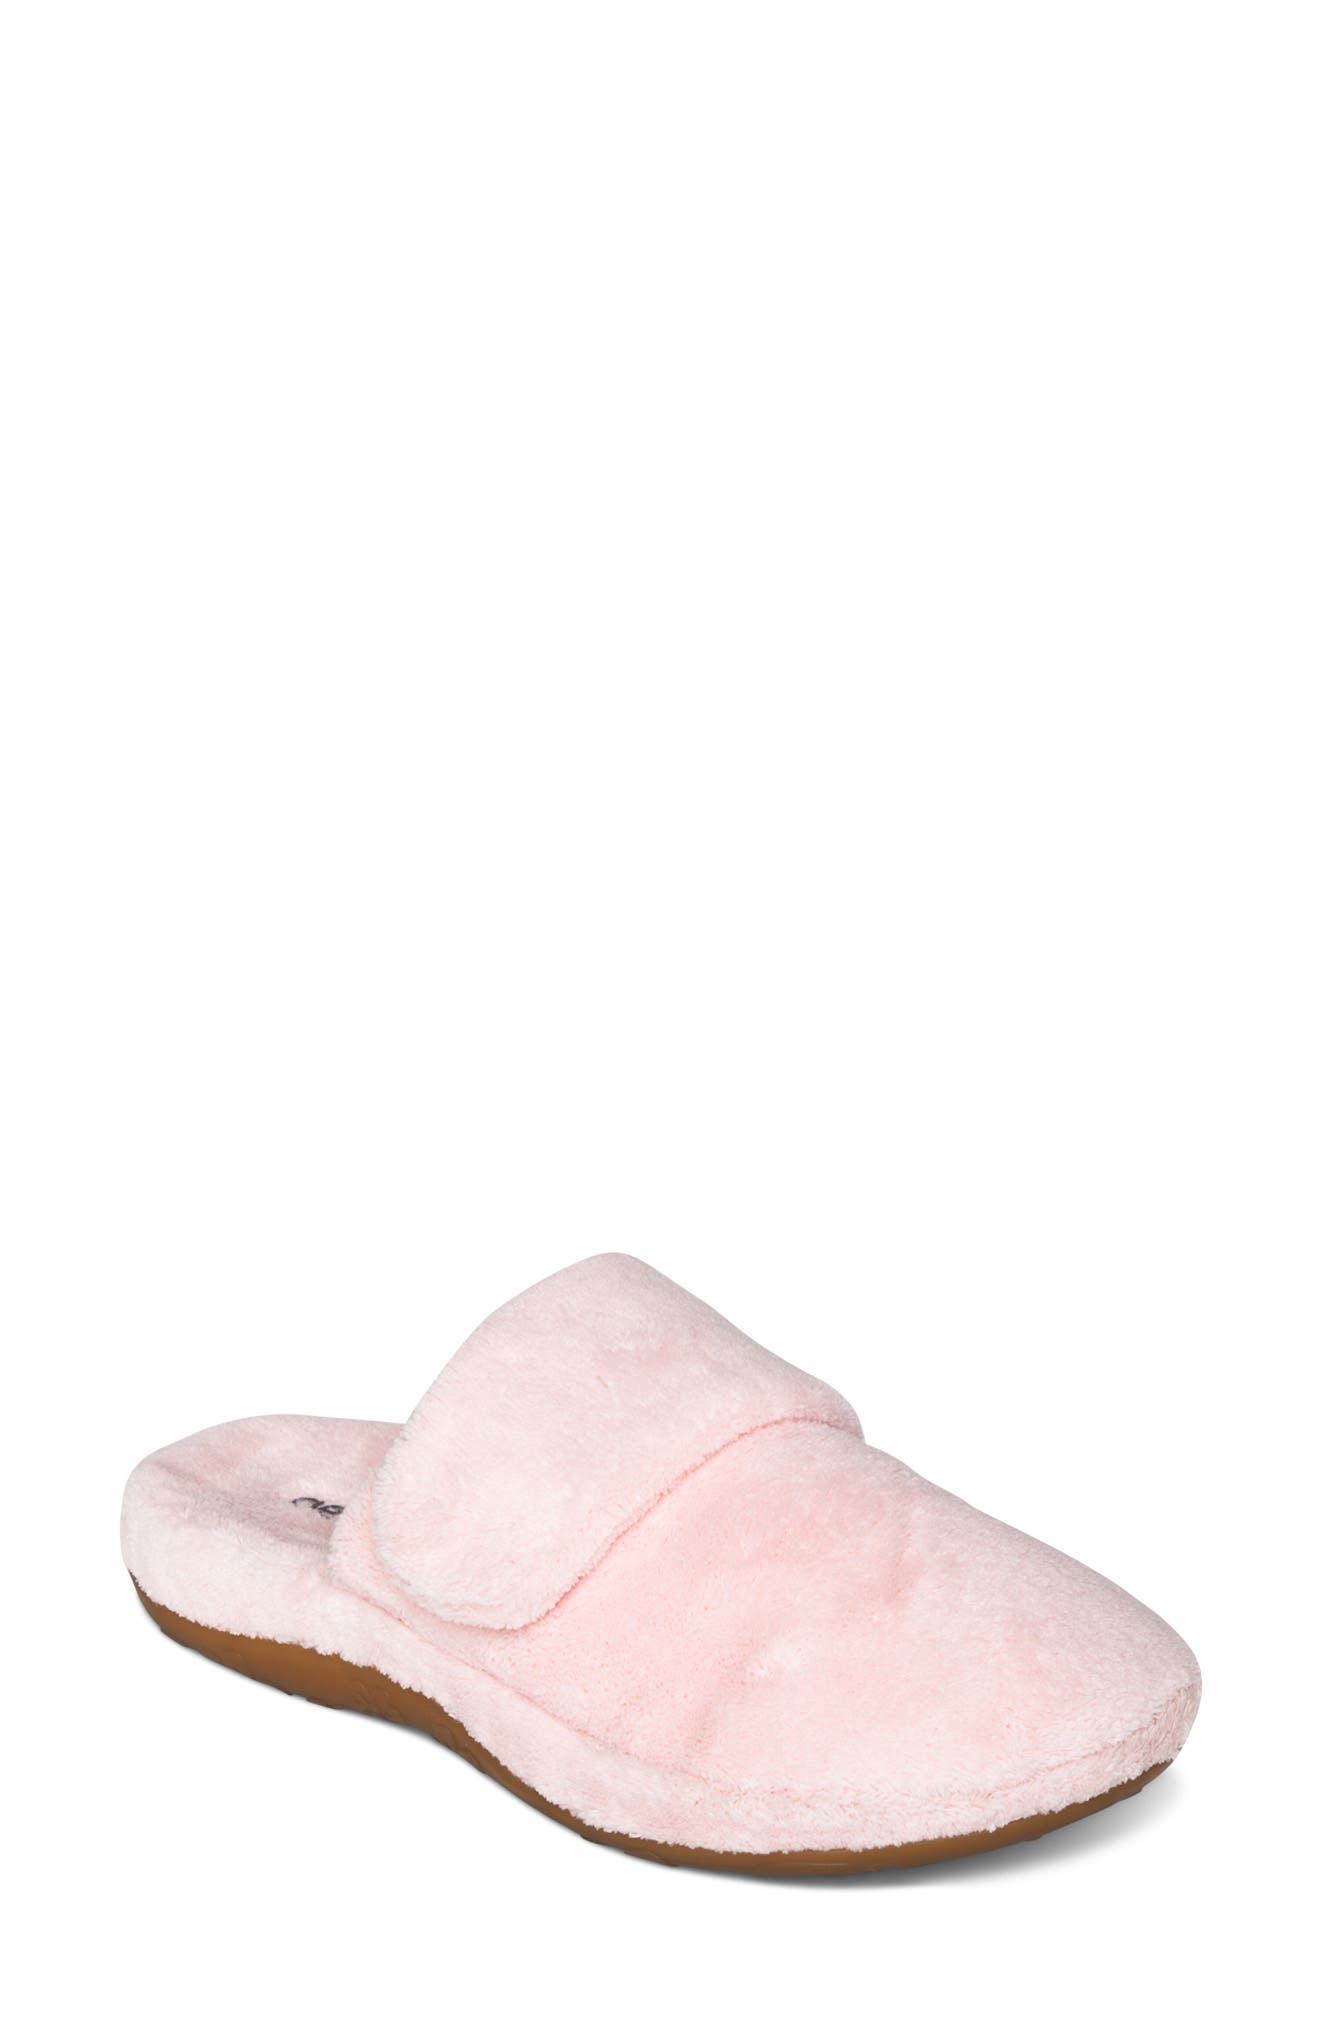 aetrex slippers